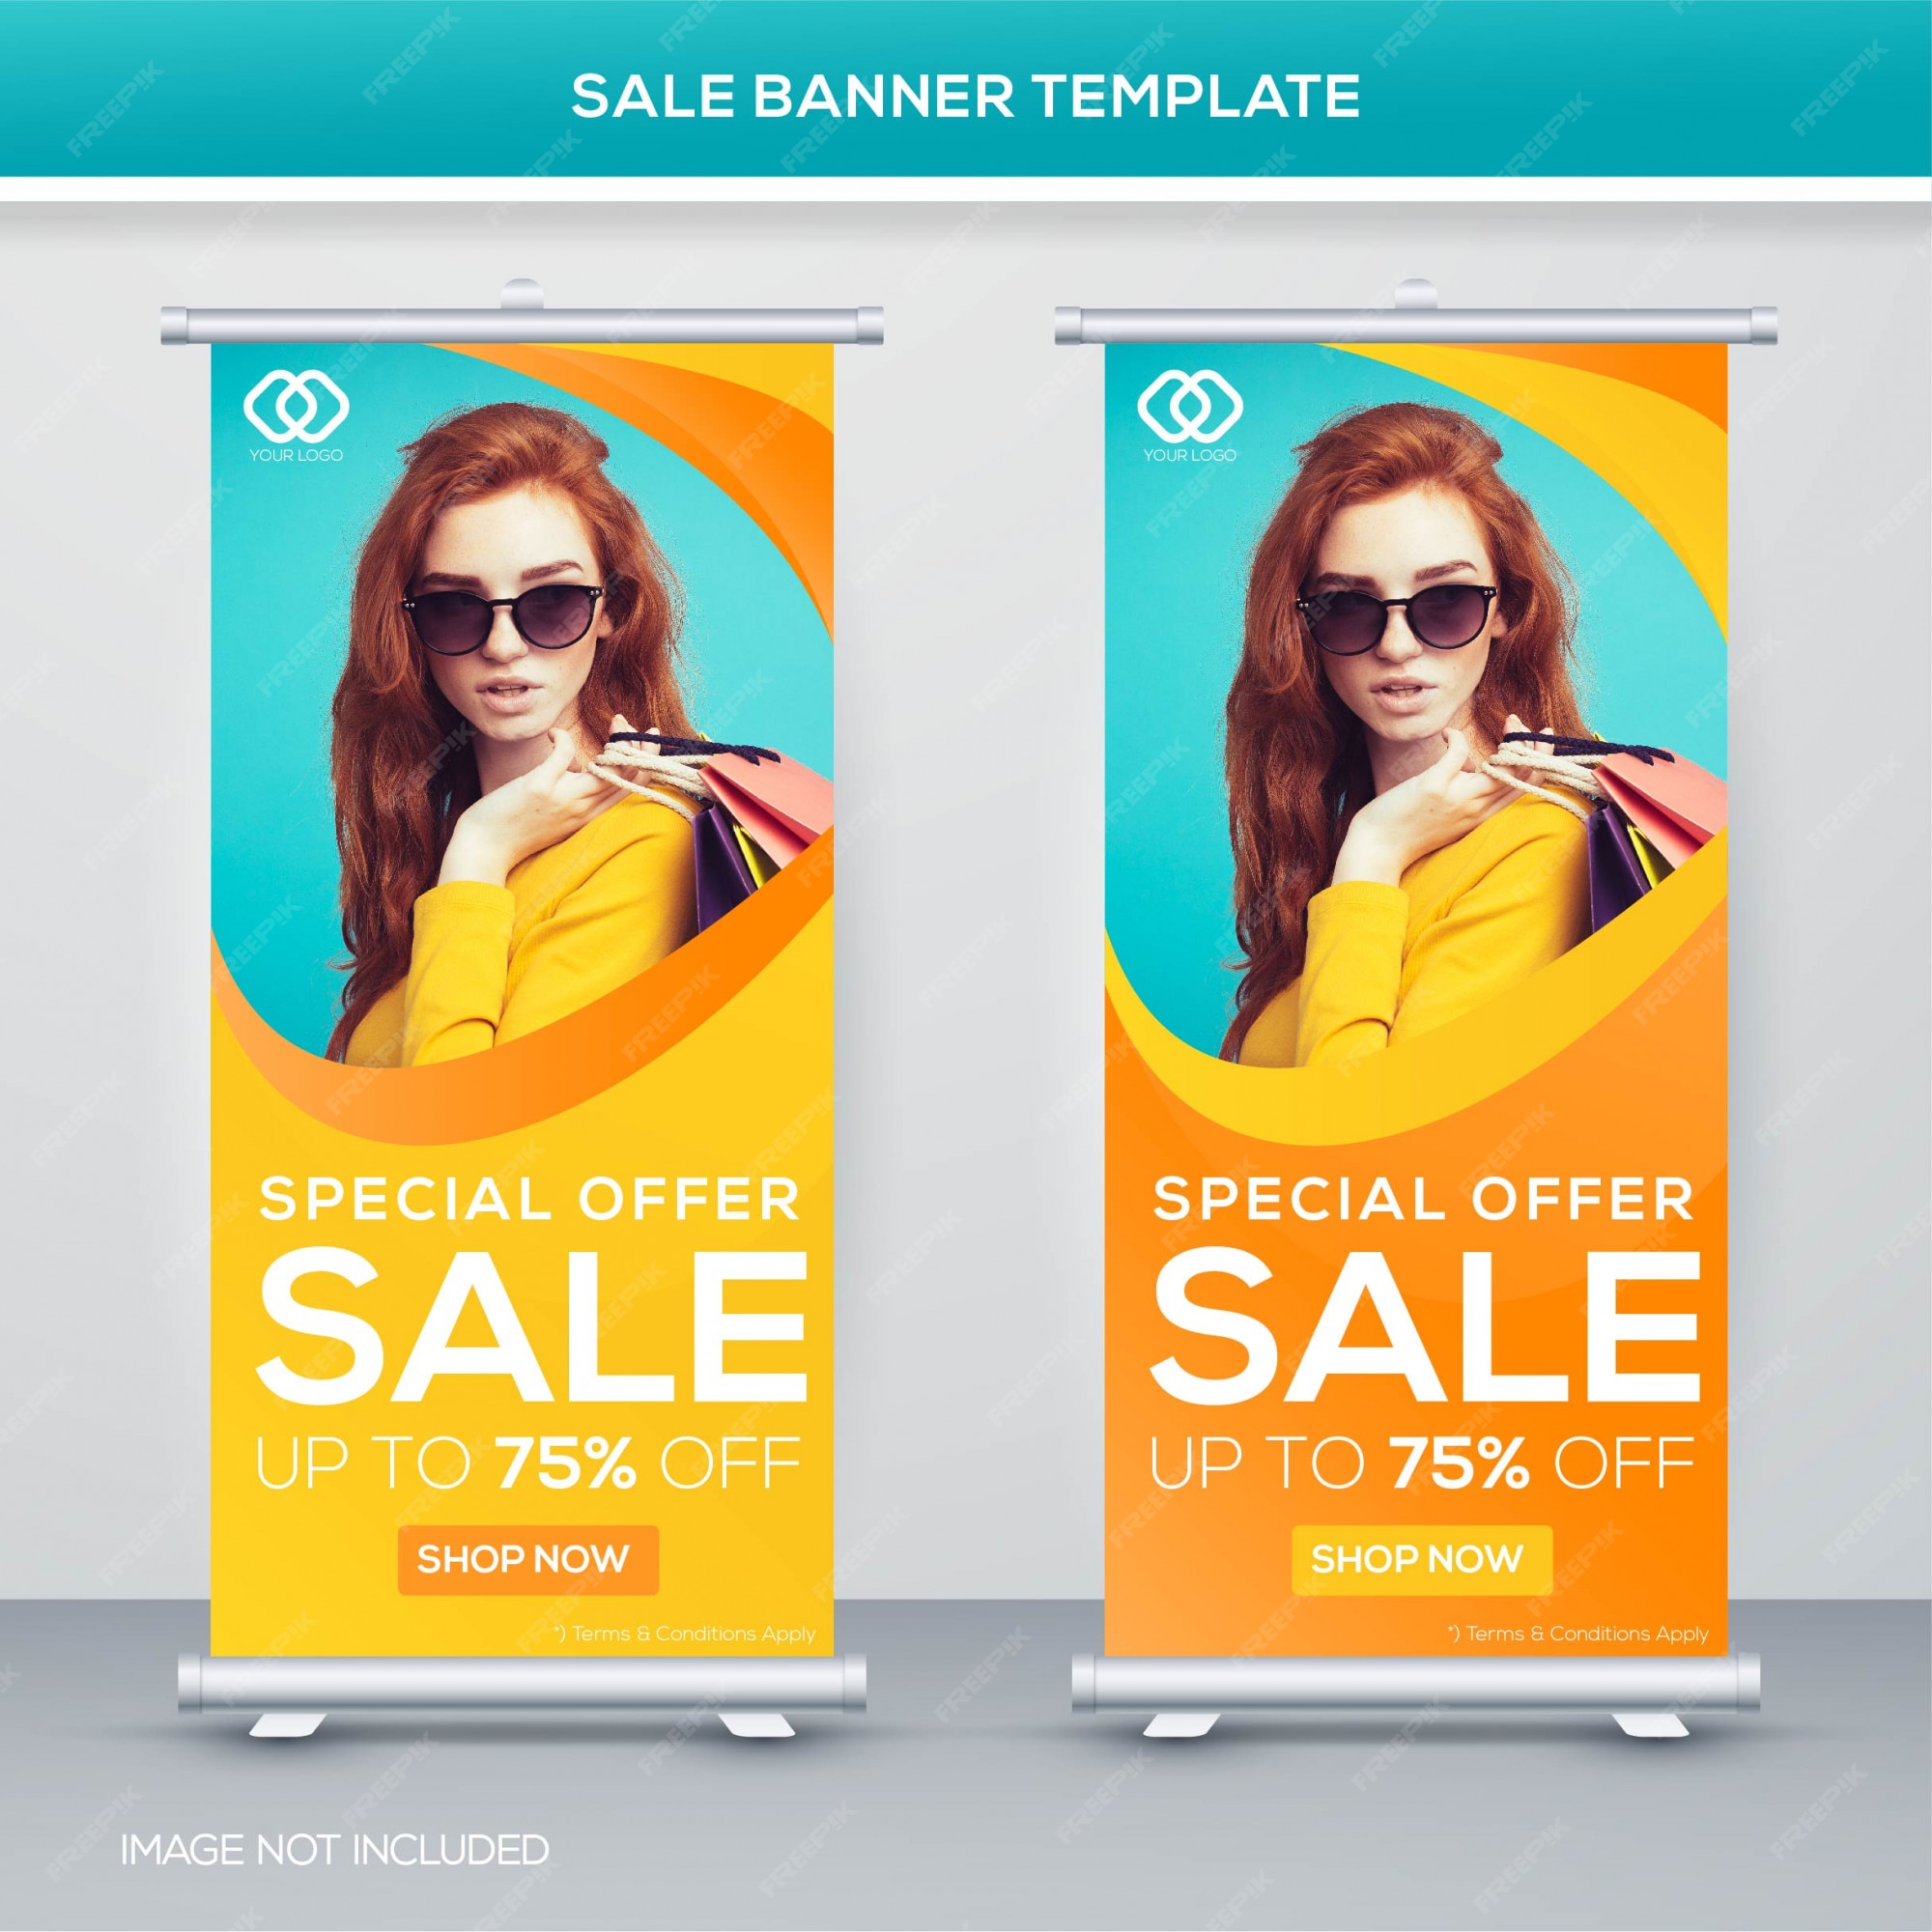 Premium Vector | Sale banner template